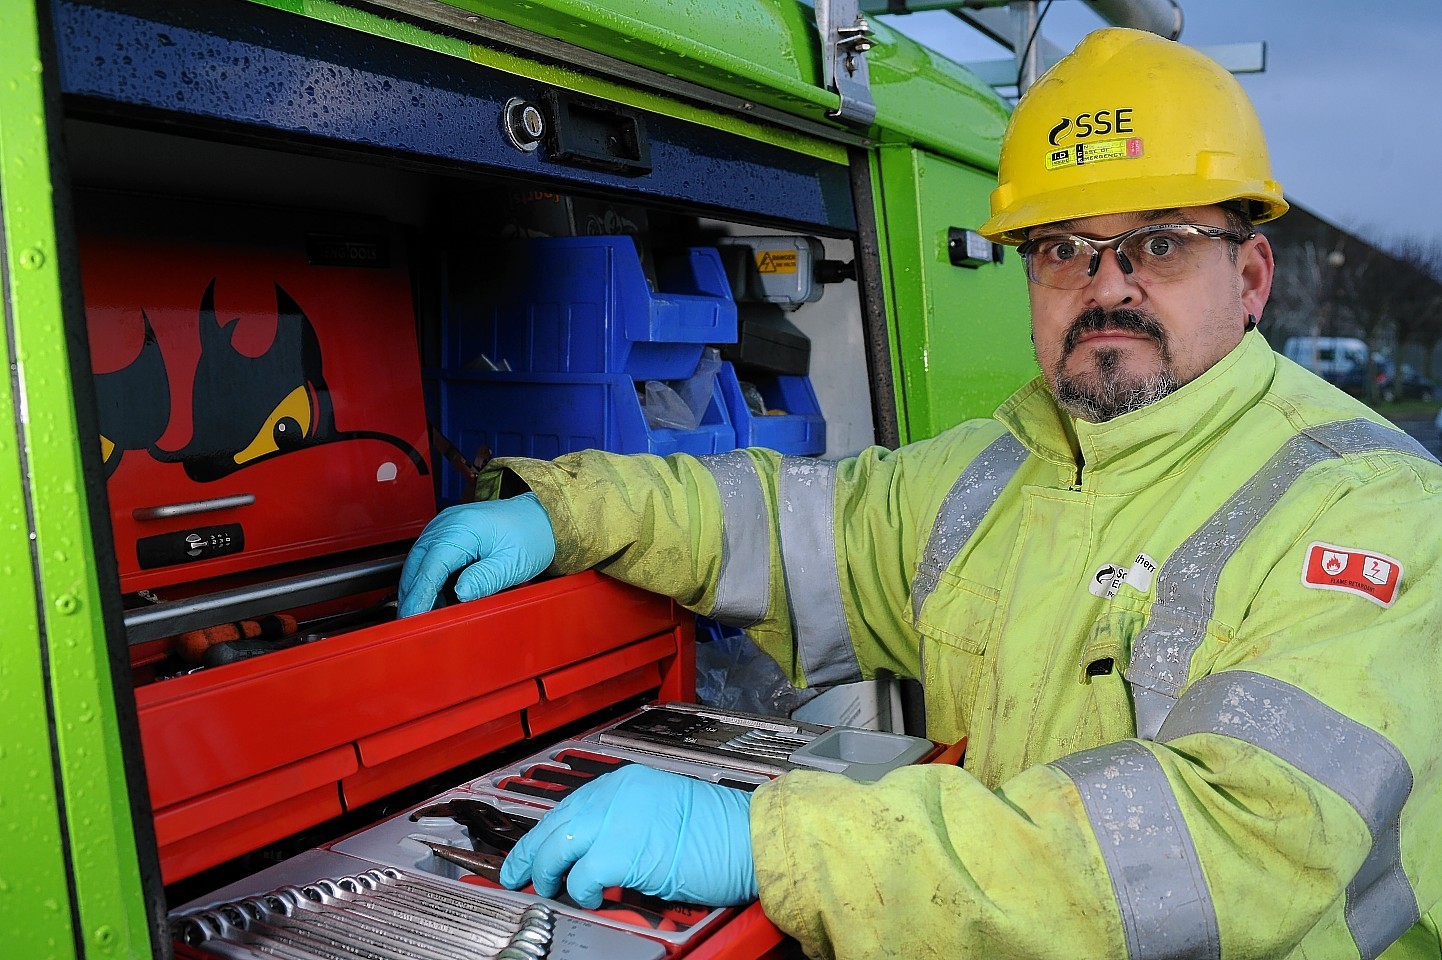 SSE's mobile generator fitter Craig Duguid prepares equipment ahead of the storm